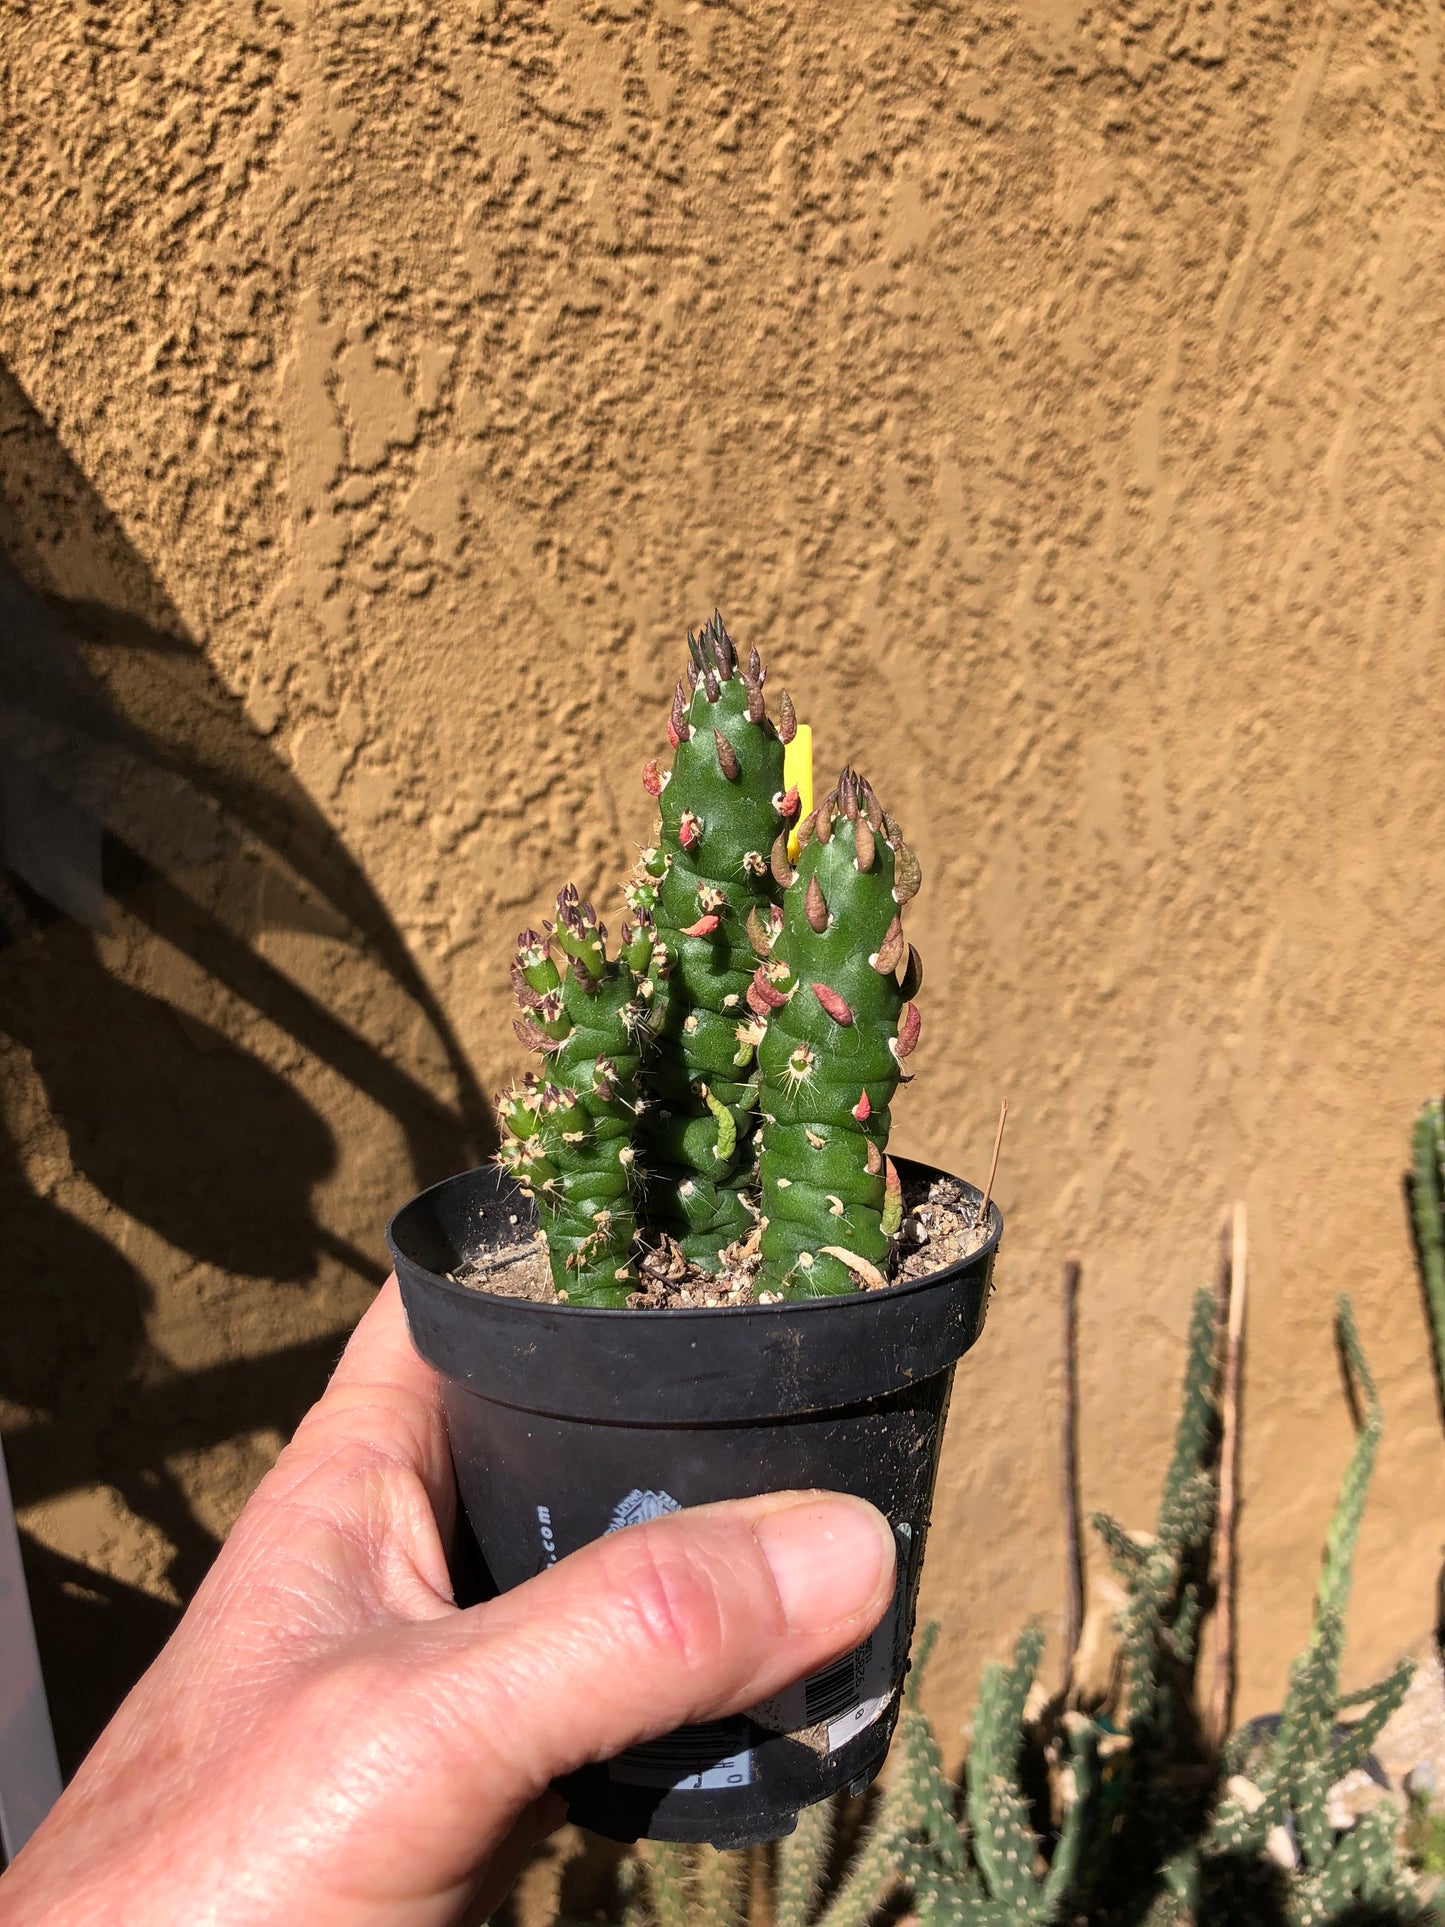 Austrocylindropuntia Cactus Gumbi Mini Eve's Needle 3.5"Tall #7Y